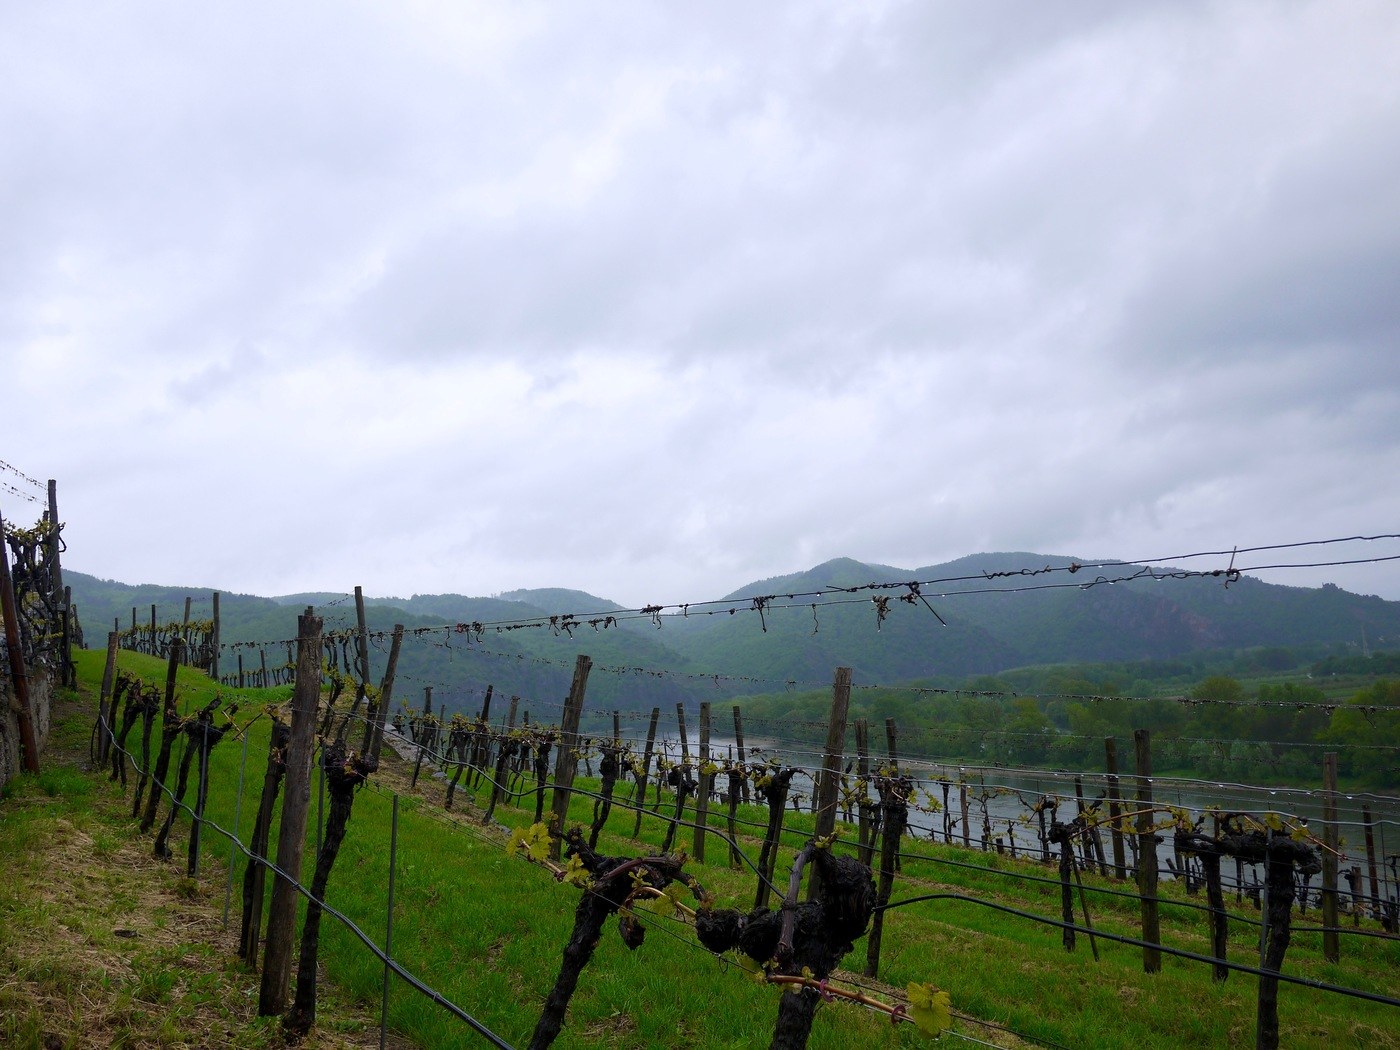 Riesling in the Wachau region of Austria - steep vineyards on the banks of the Danube